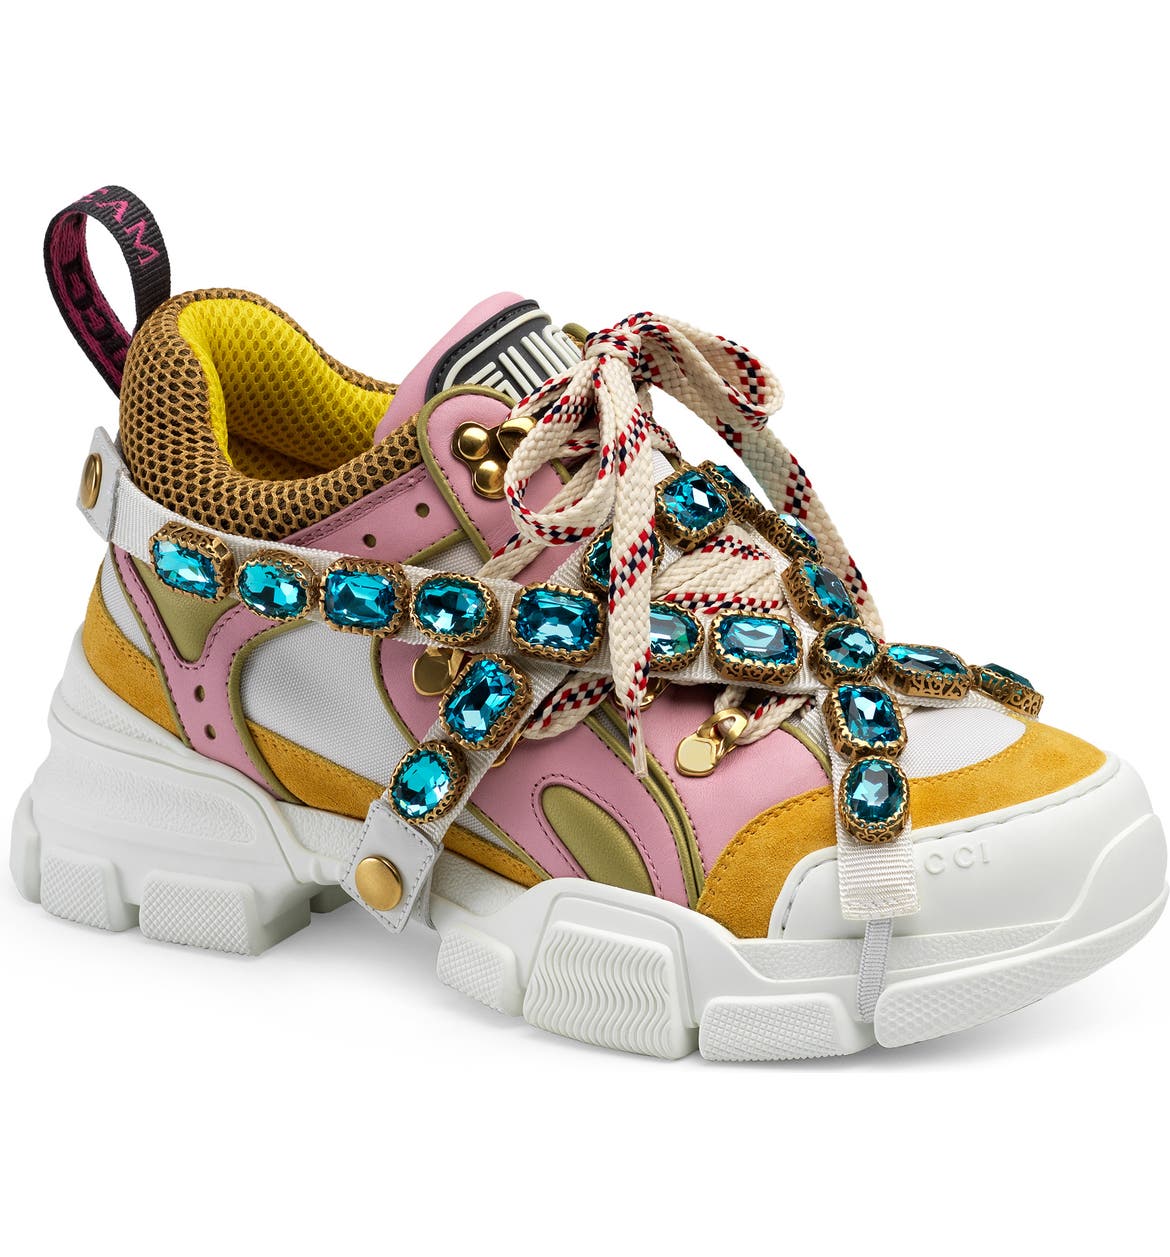 GUCCI Flashtrek Jewel Embellished Sneaker, Main, color, PINK/ YELLOW/ BLUE